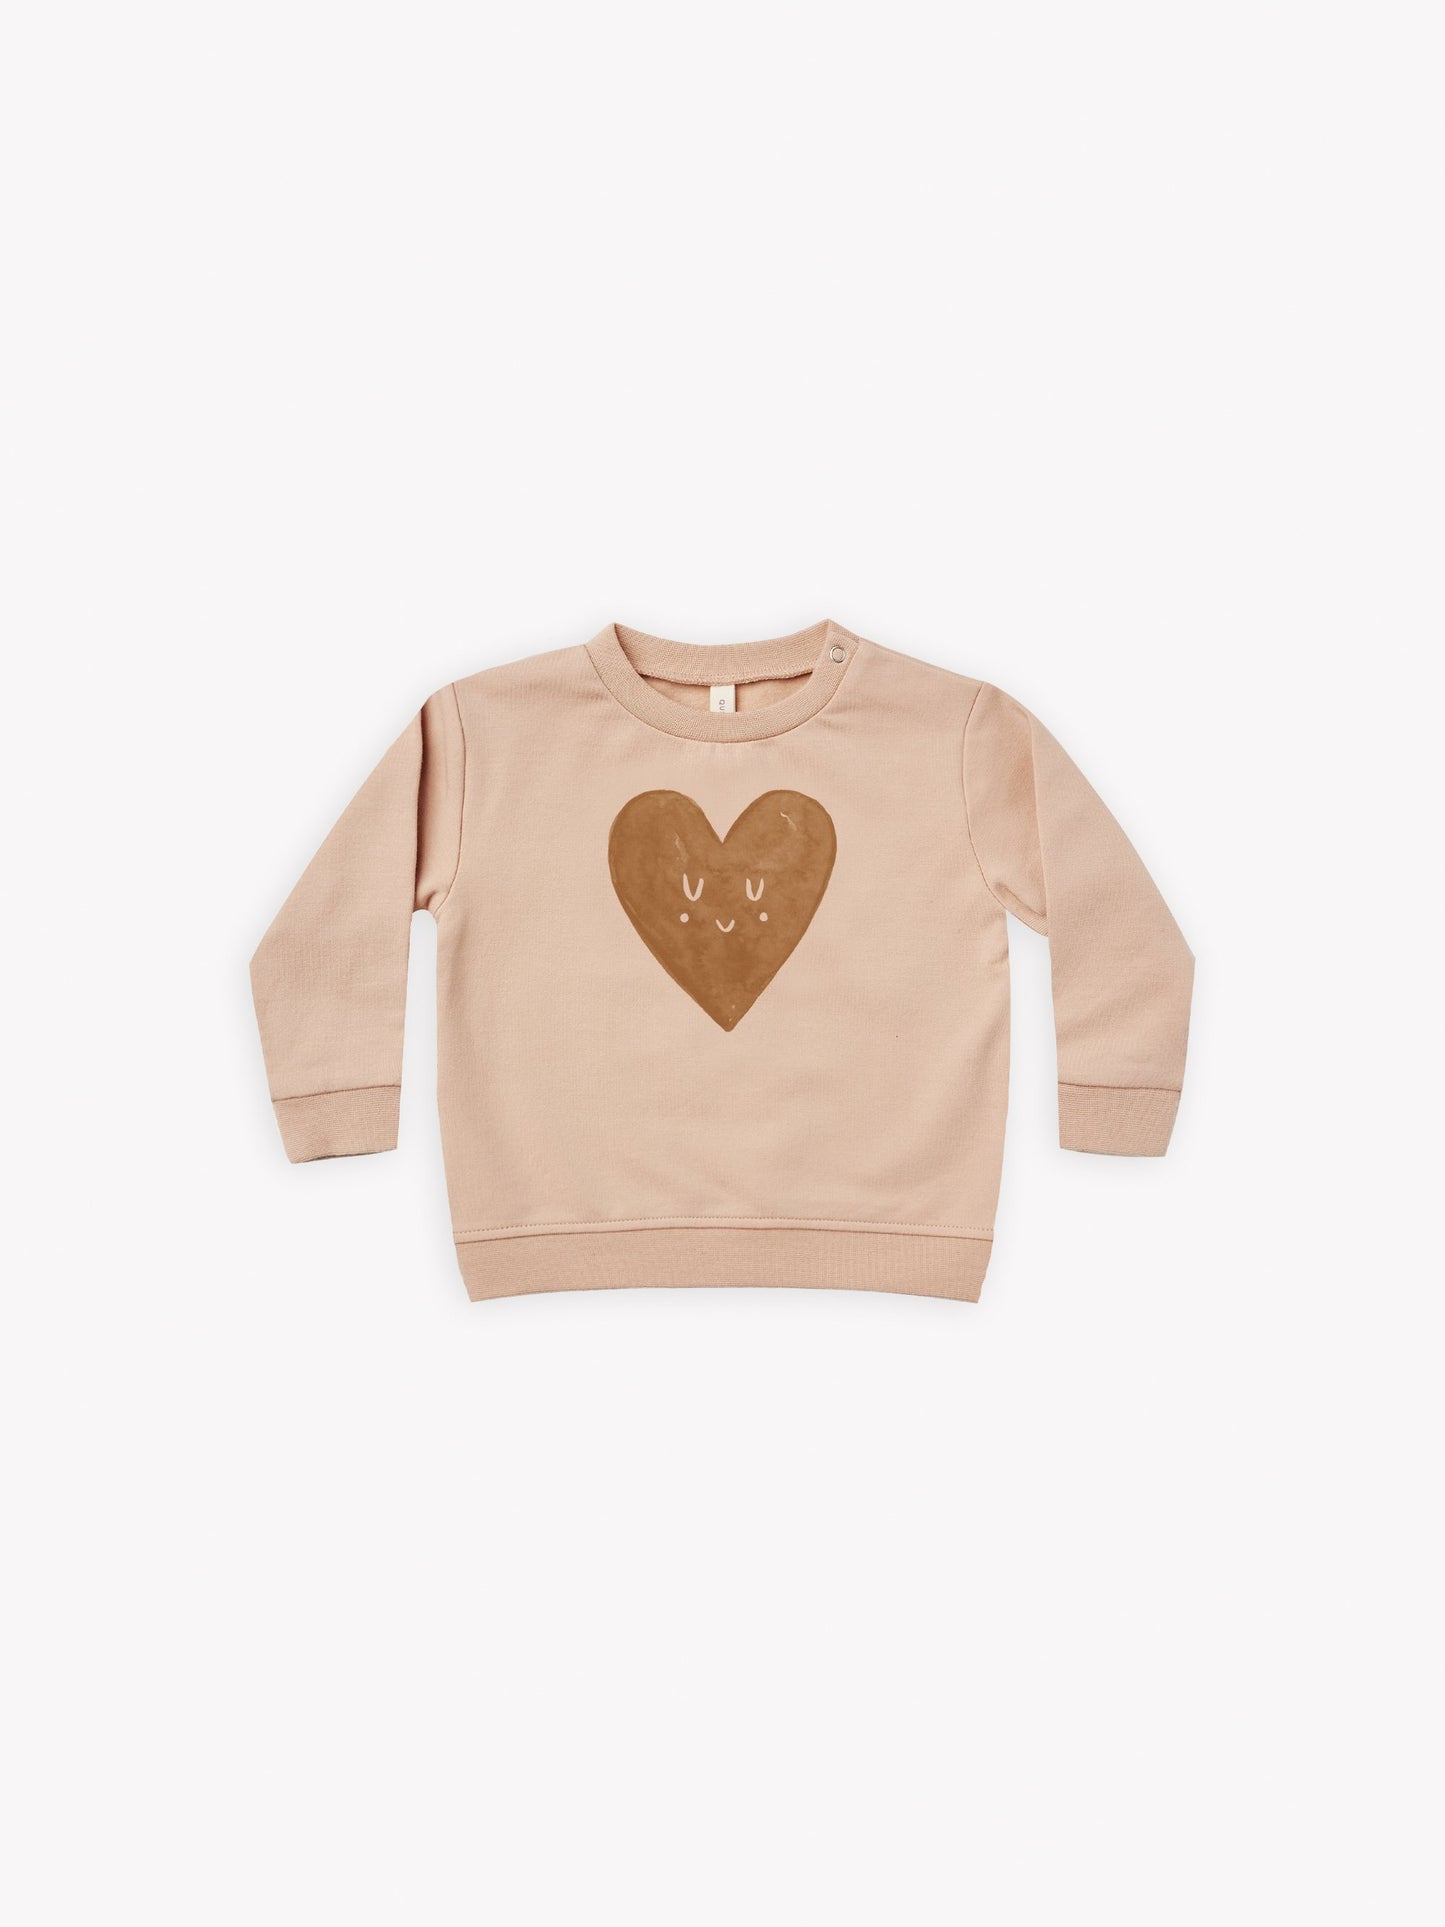 Sweatshirt and Pants Set in Heart  - Doodlebug's Children's Boutique